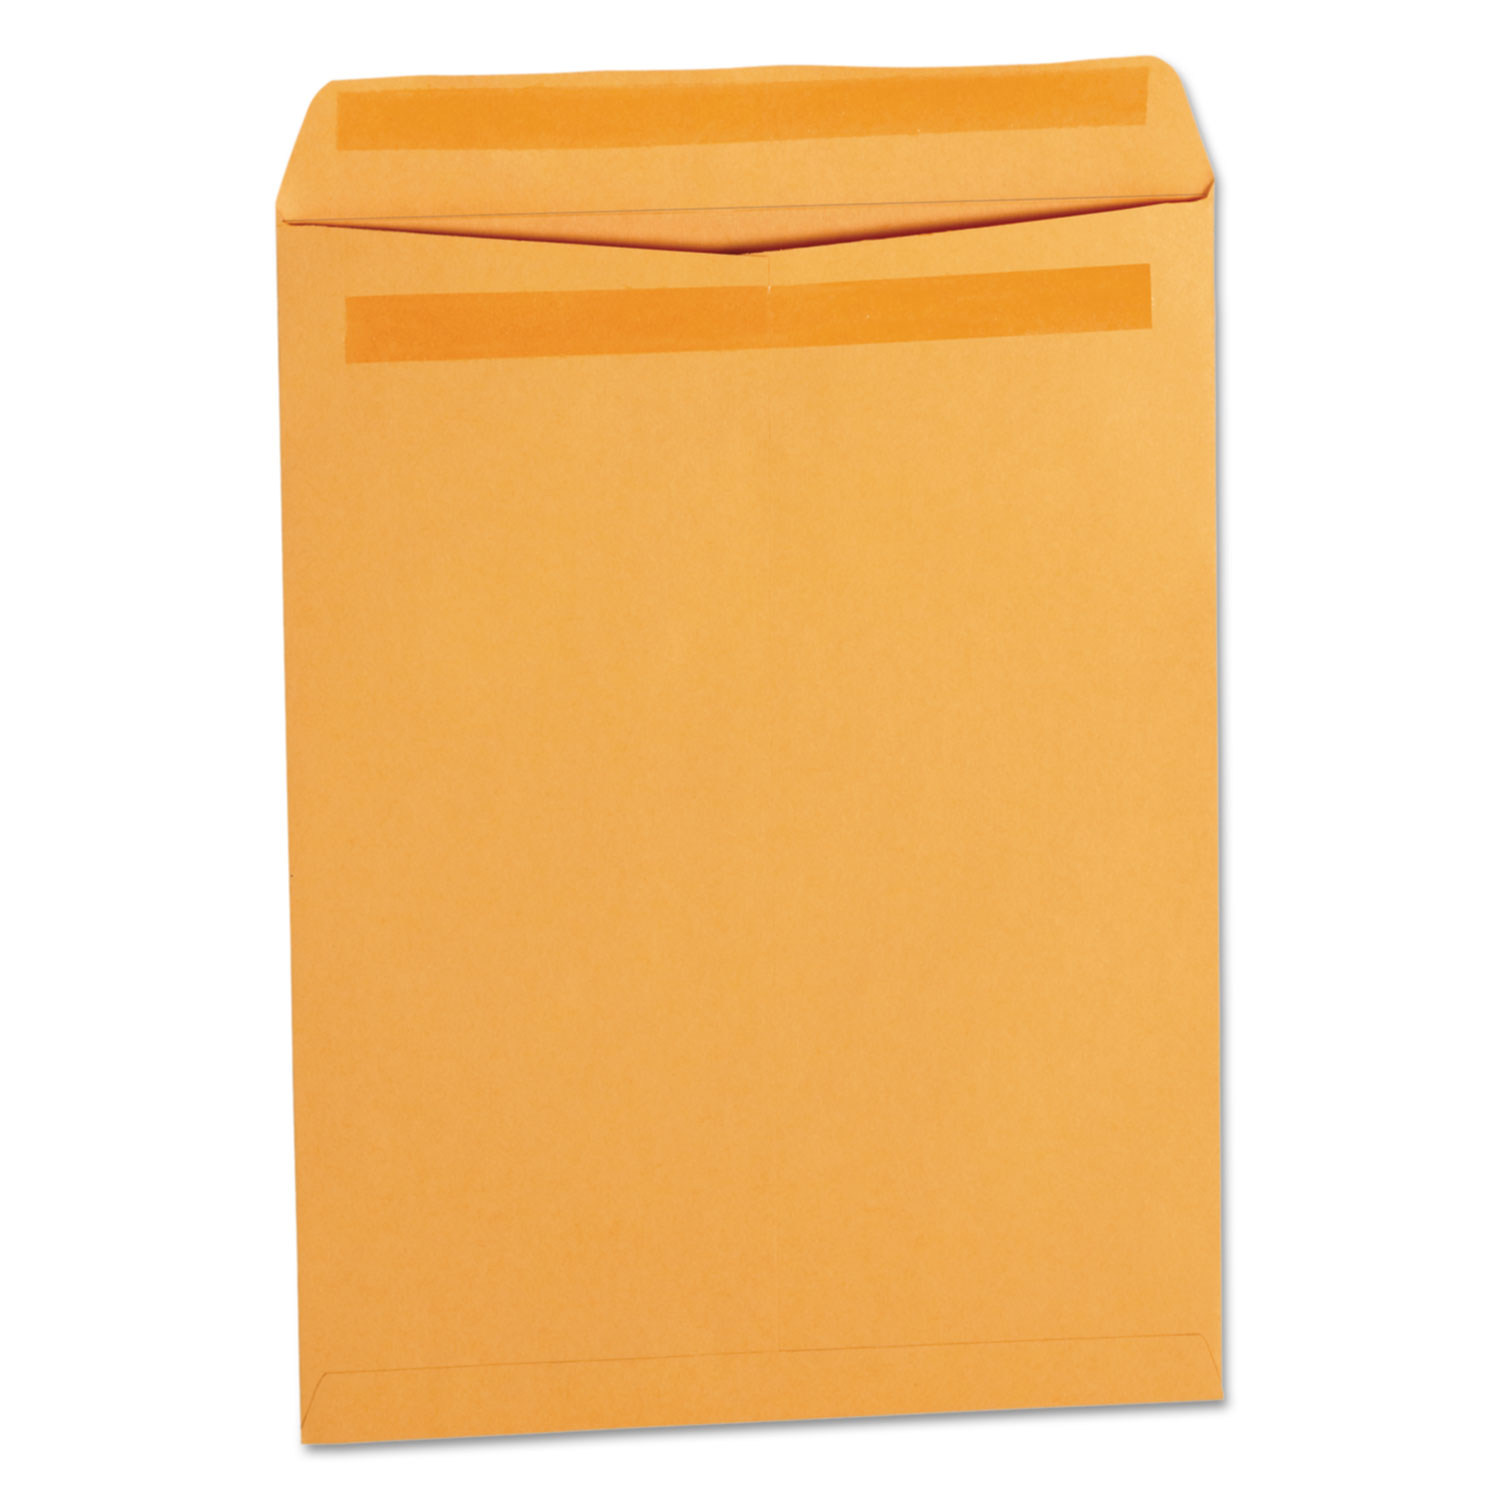  Universal UNV35291 Self-Stick Open-End Catalog Envelope, #12 1/2, Square Flap, Self-Adhesive Closure, 9.5 x 12.5, Brown Kraft, 250/Box (UNV35291) 